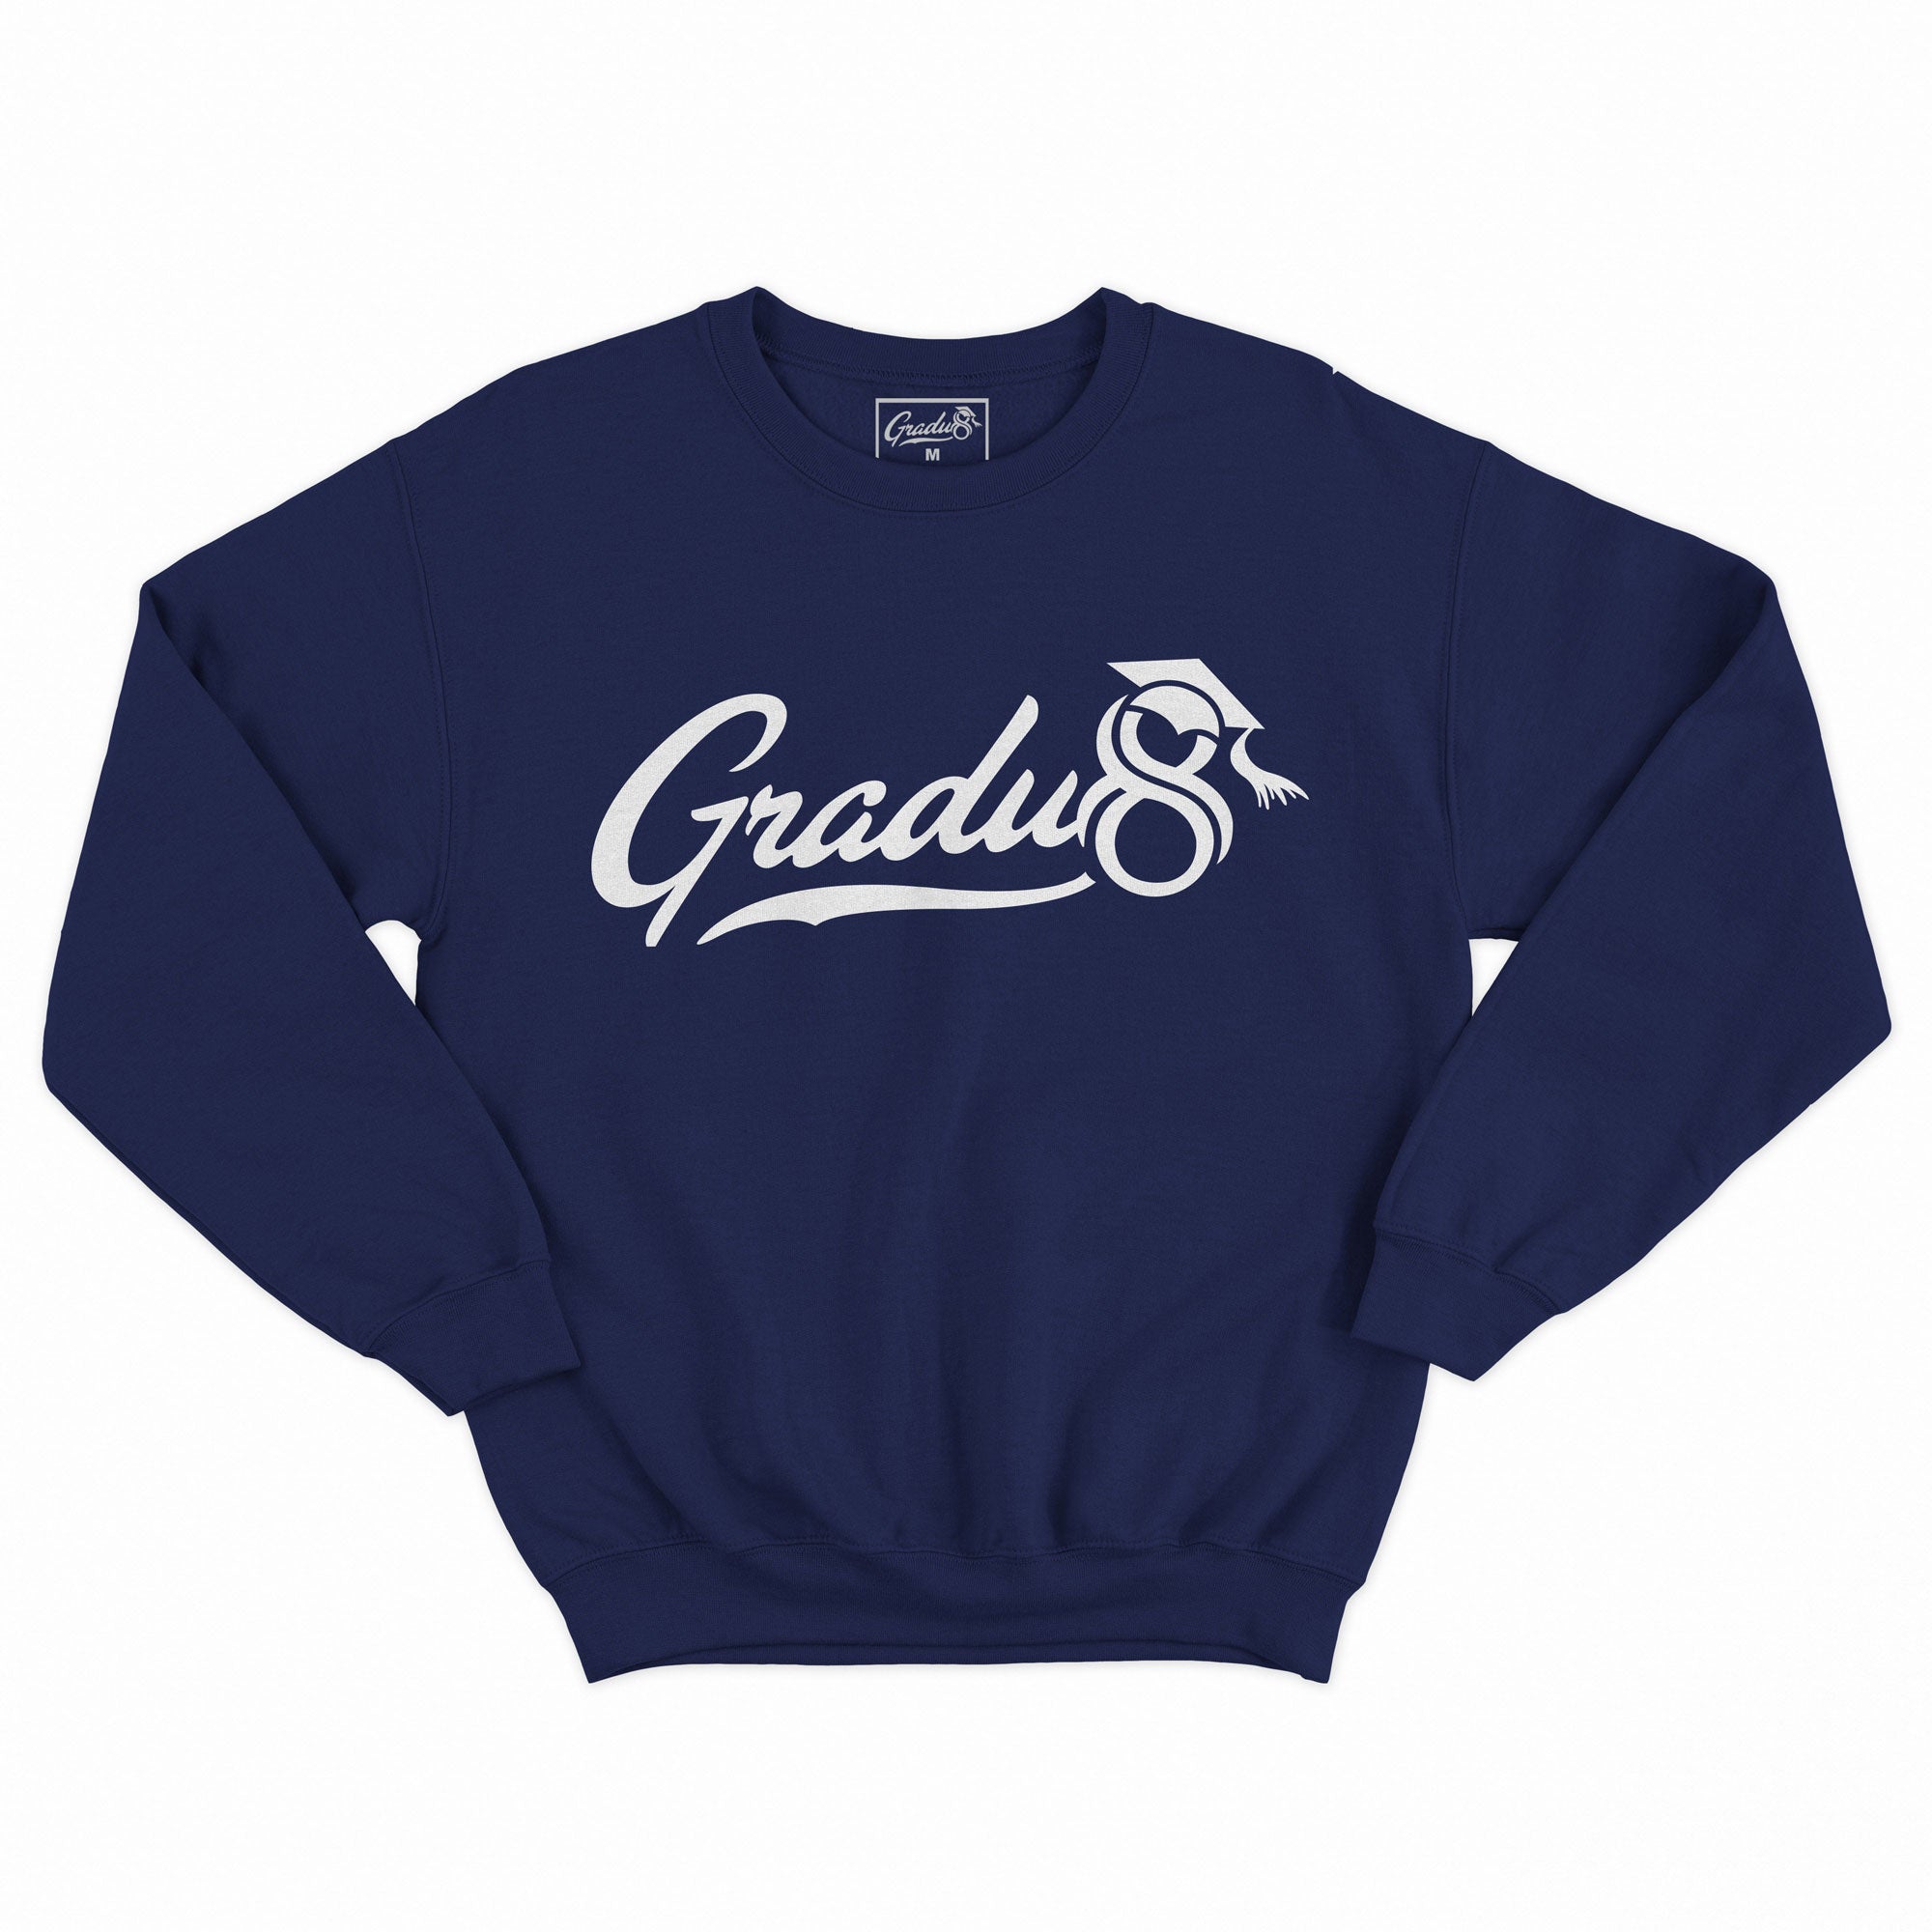 Official Gradu8 Premium Sweatshirt - Navy Blue